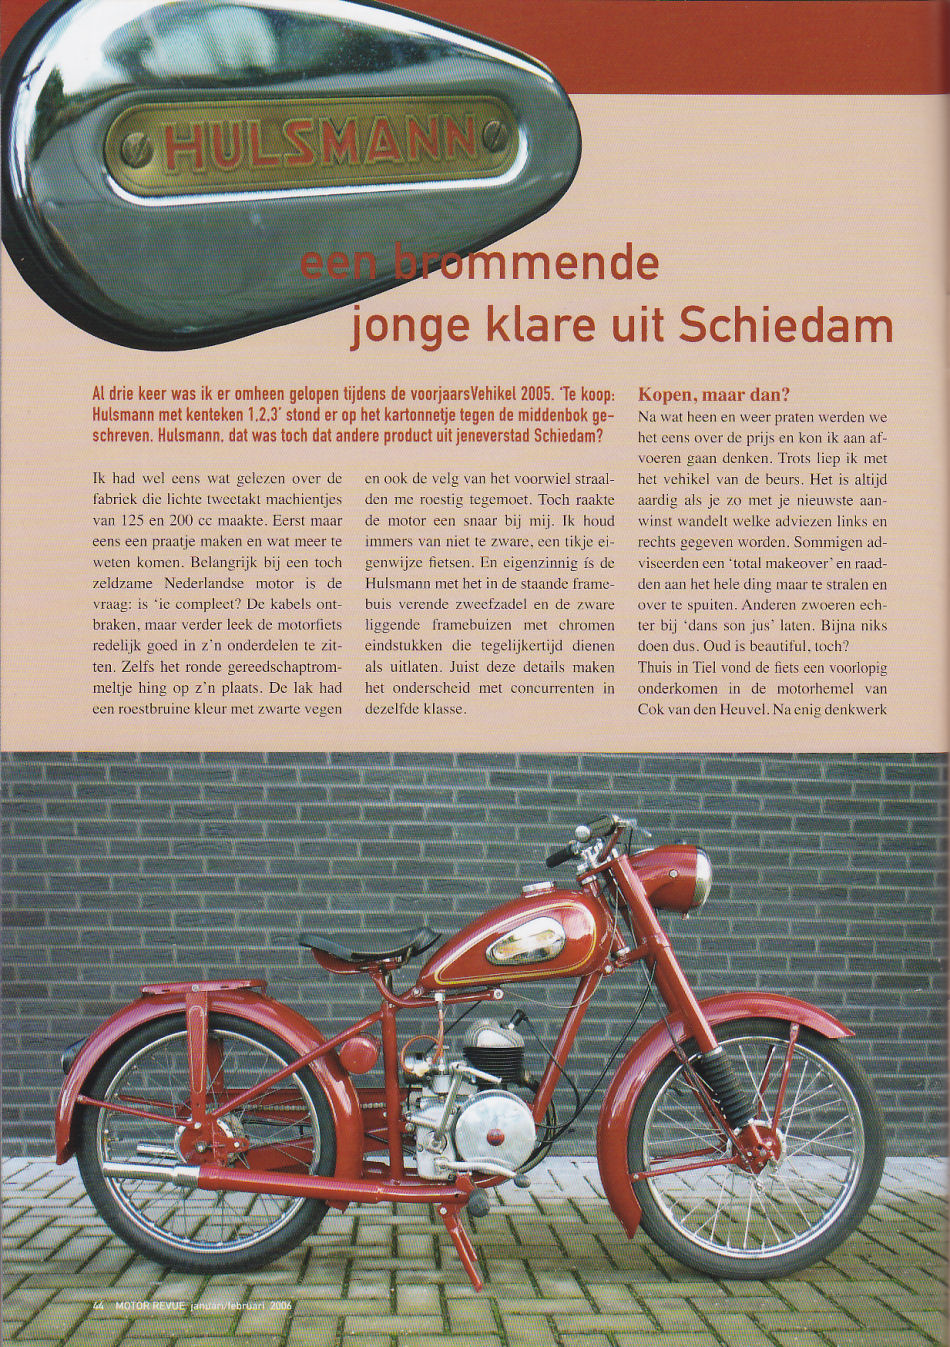 Over Hulsmann - Motor Revue jan/feb 2006